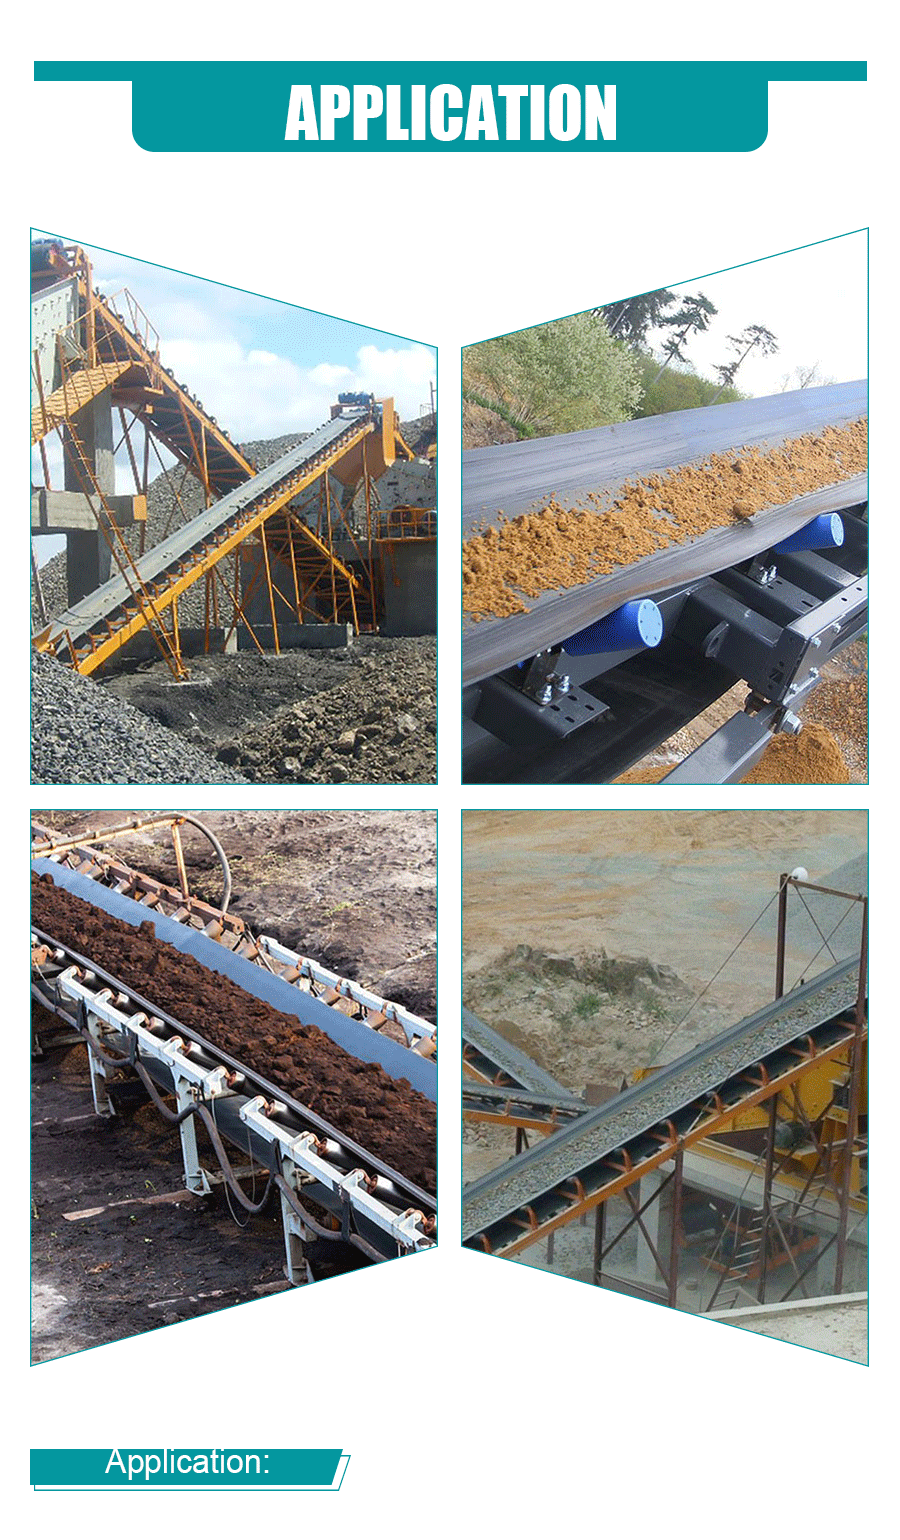 Cement conveyor belt